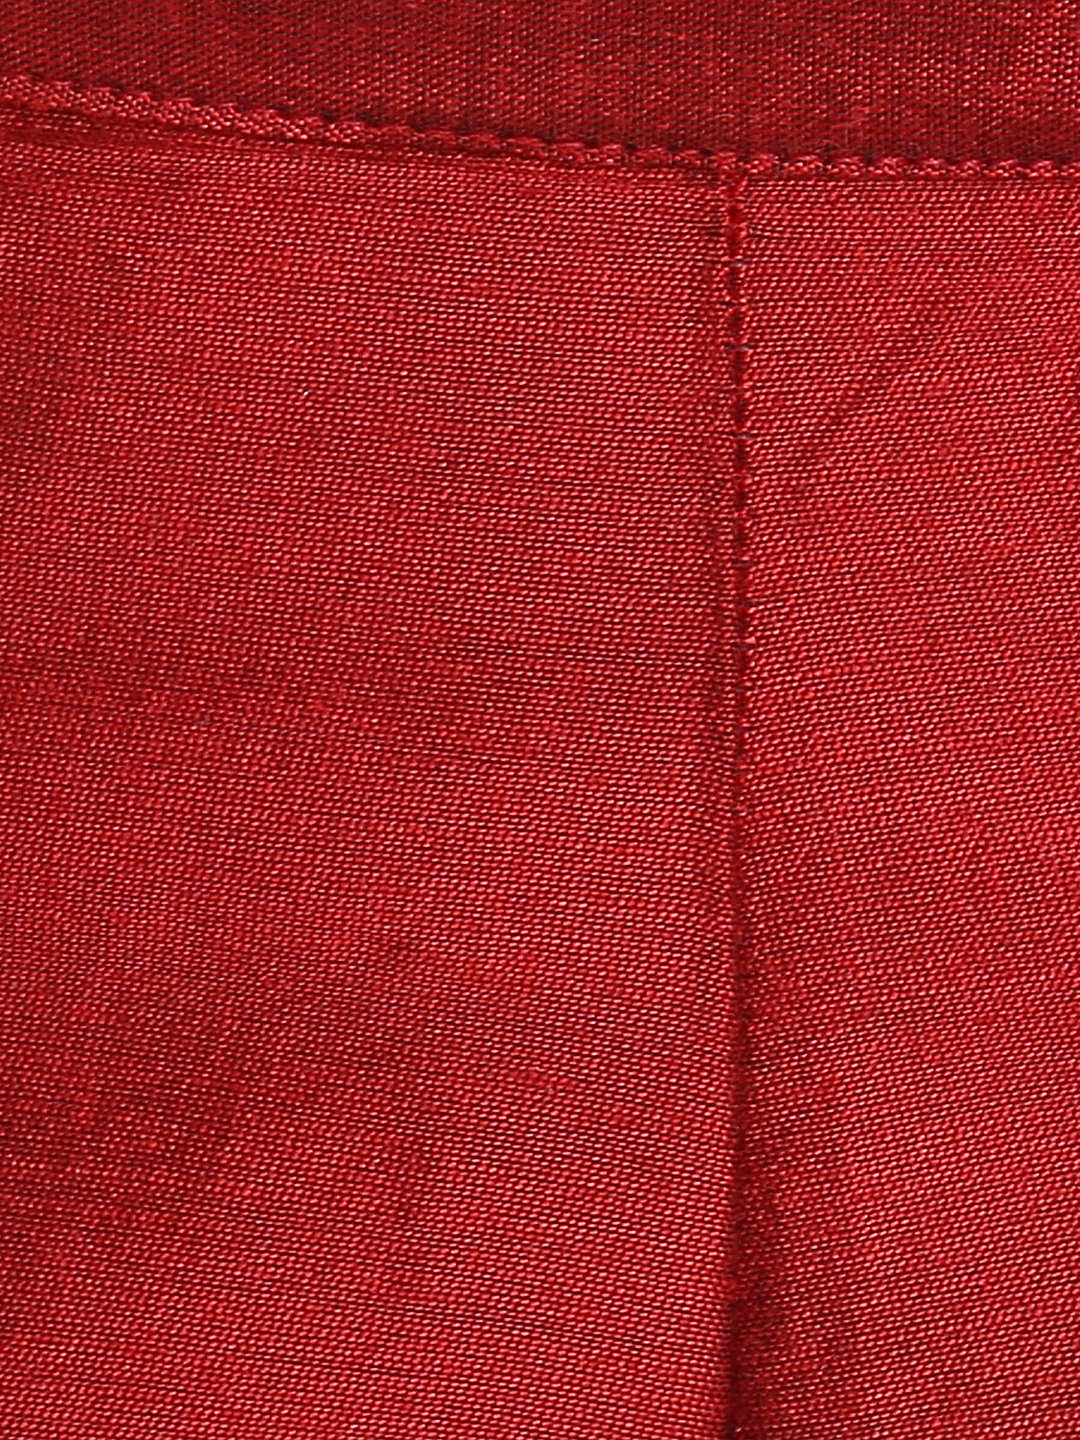 Abhishti Cotton Silk Tiered Flared Kurta with Lace Yoke detail with Bottom